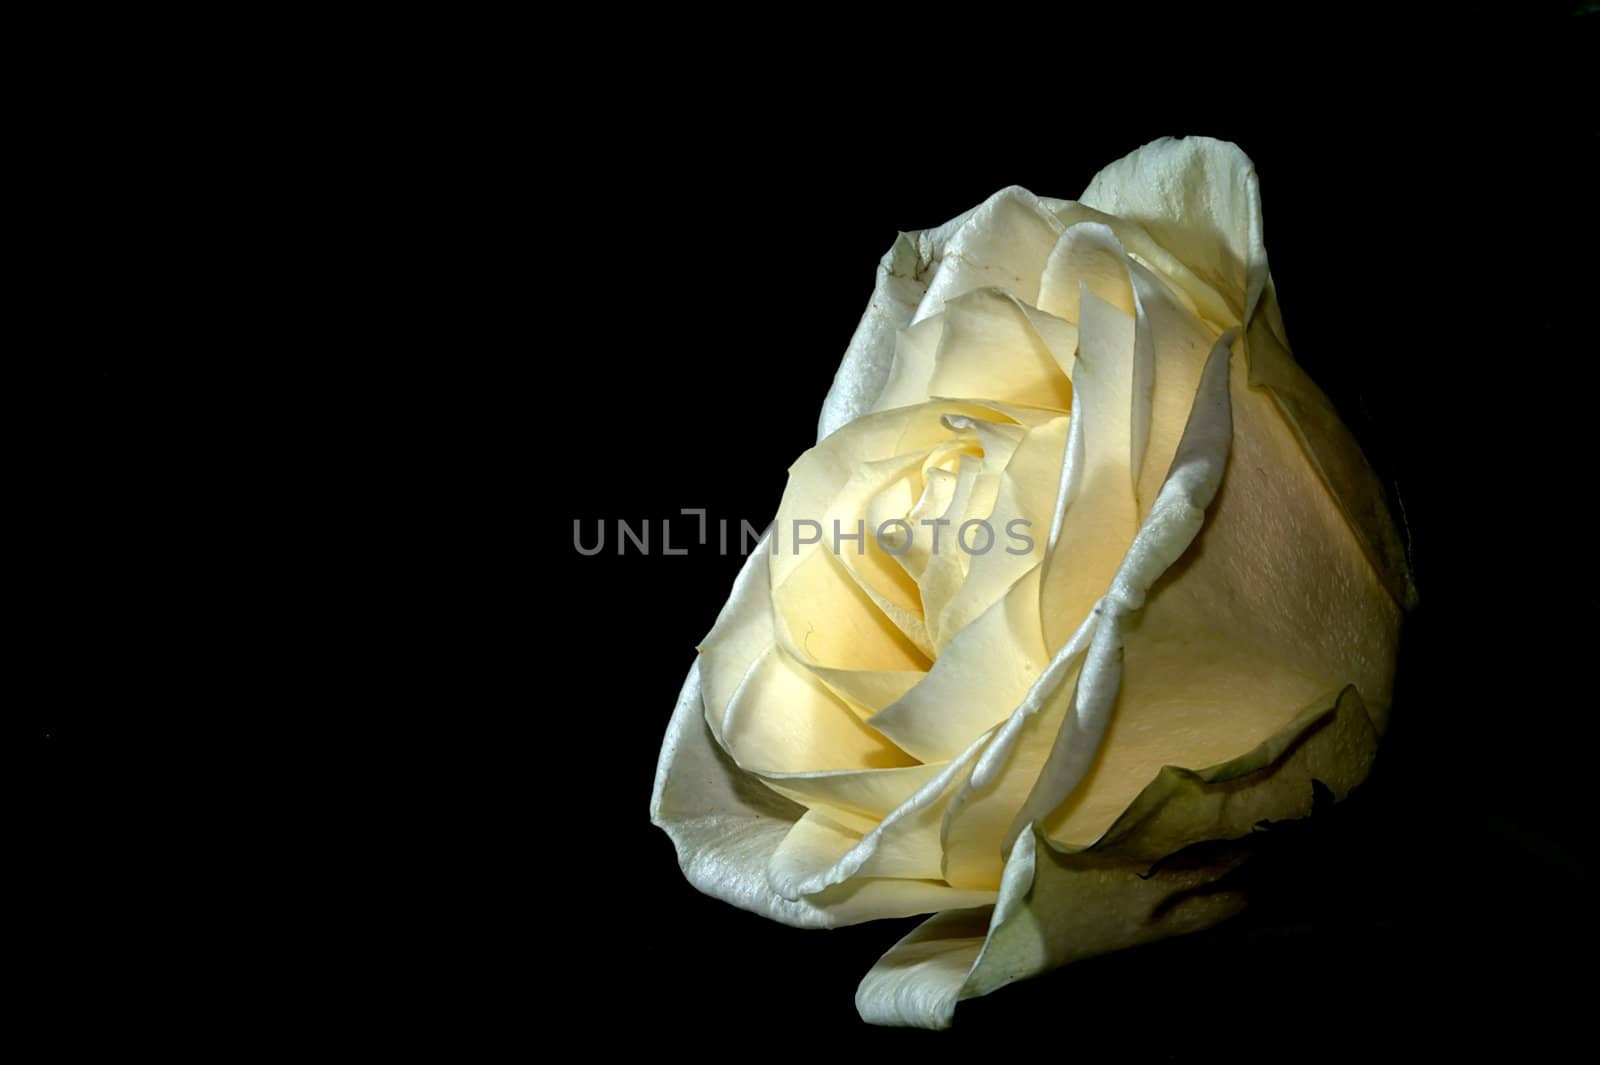 white rose on black background by arnelsr